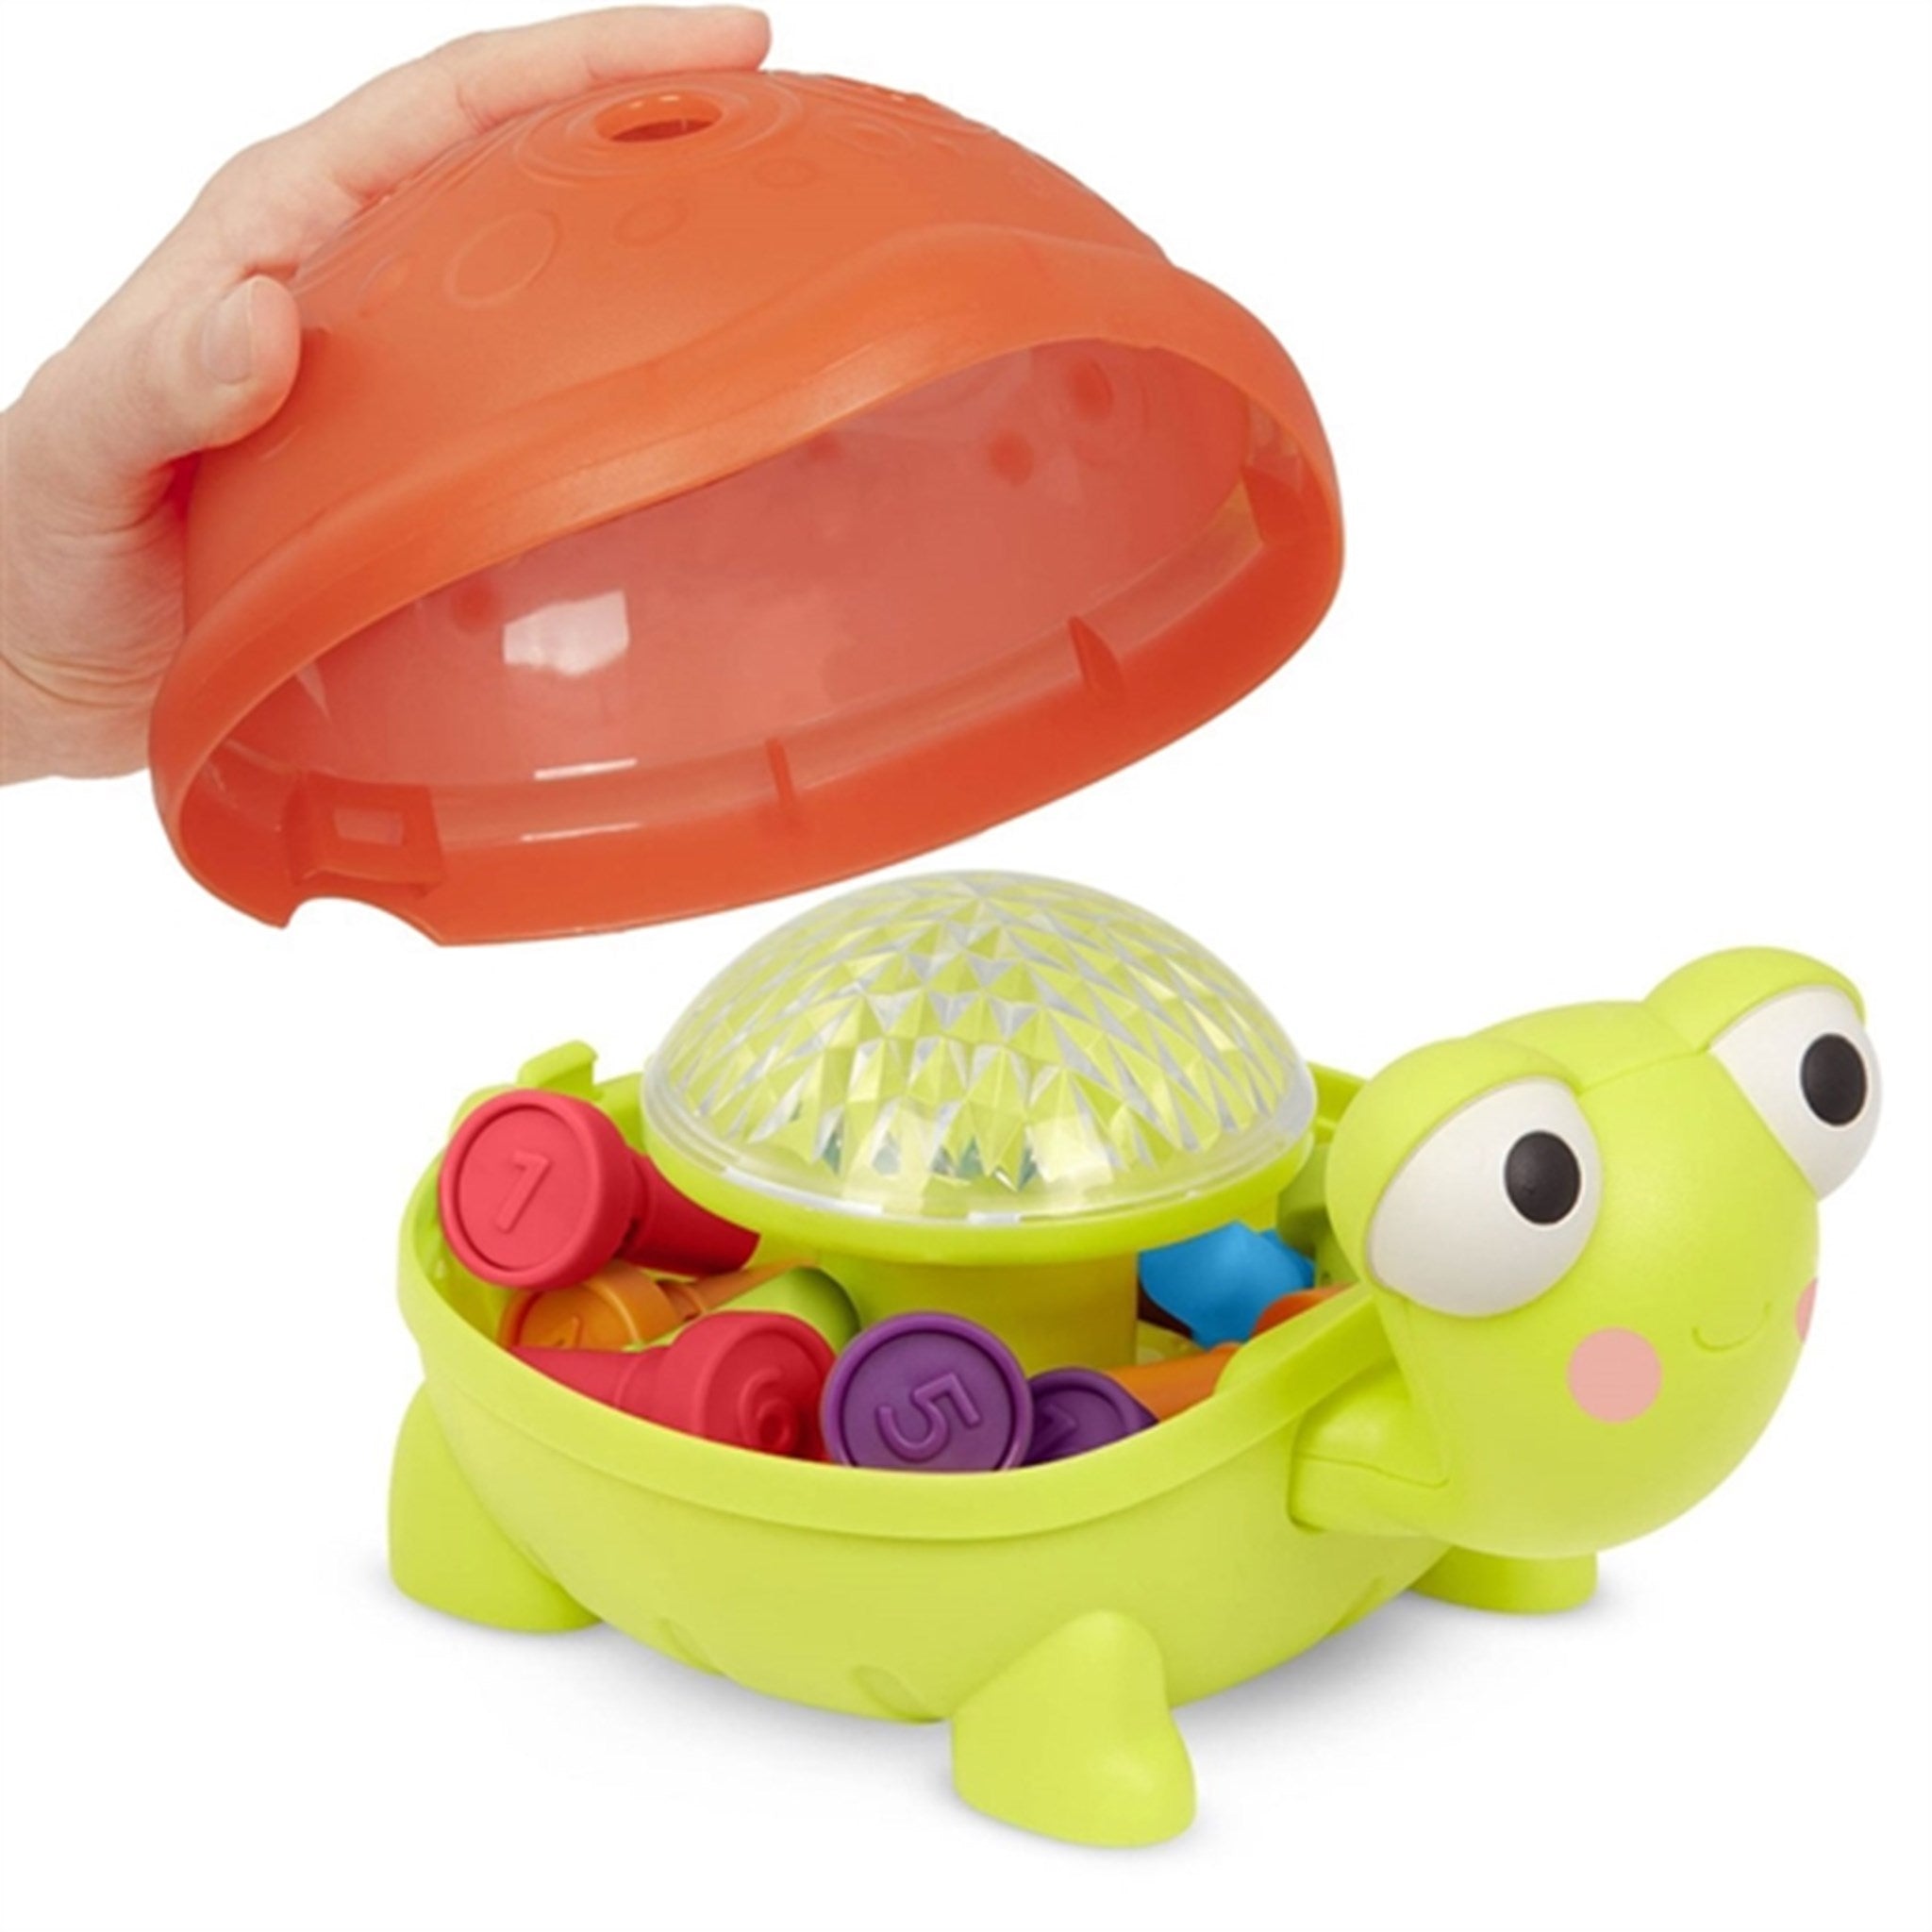 B-toys Teaching Turtle 2